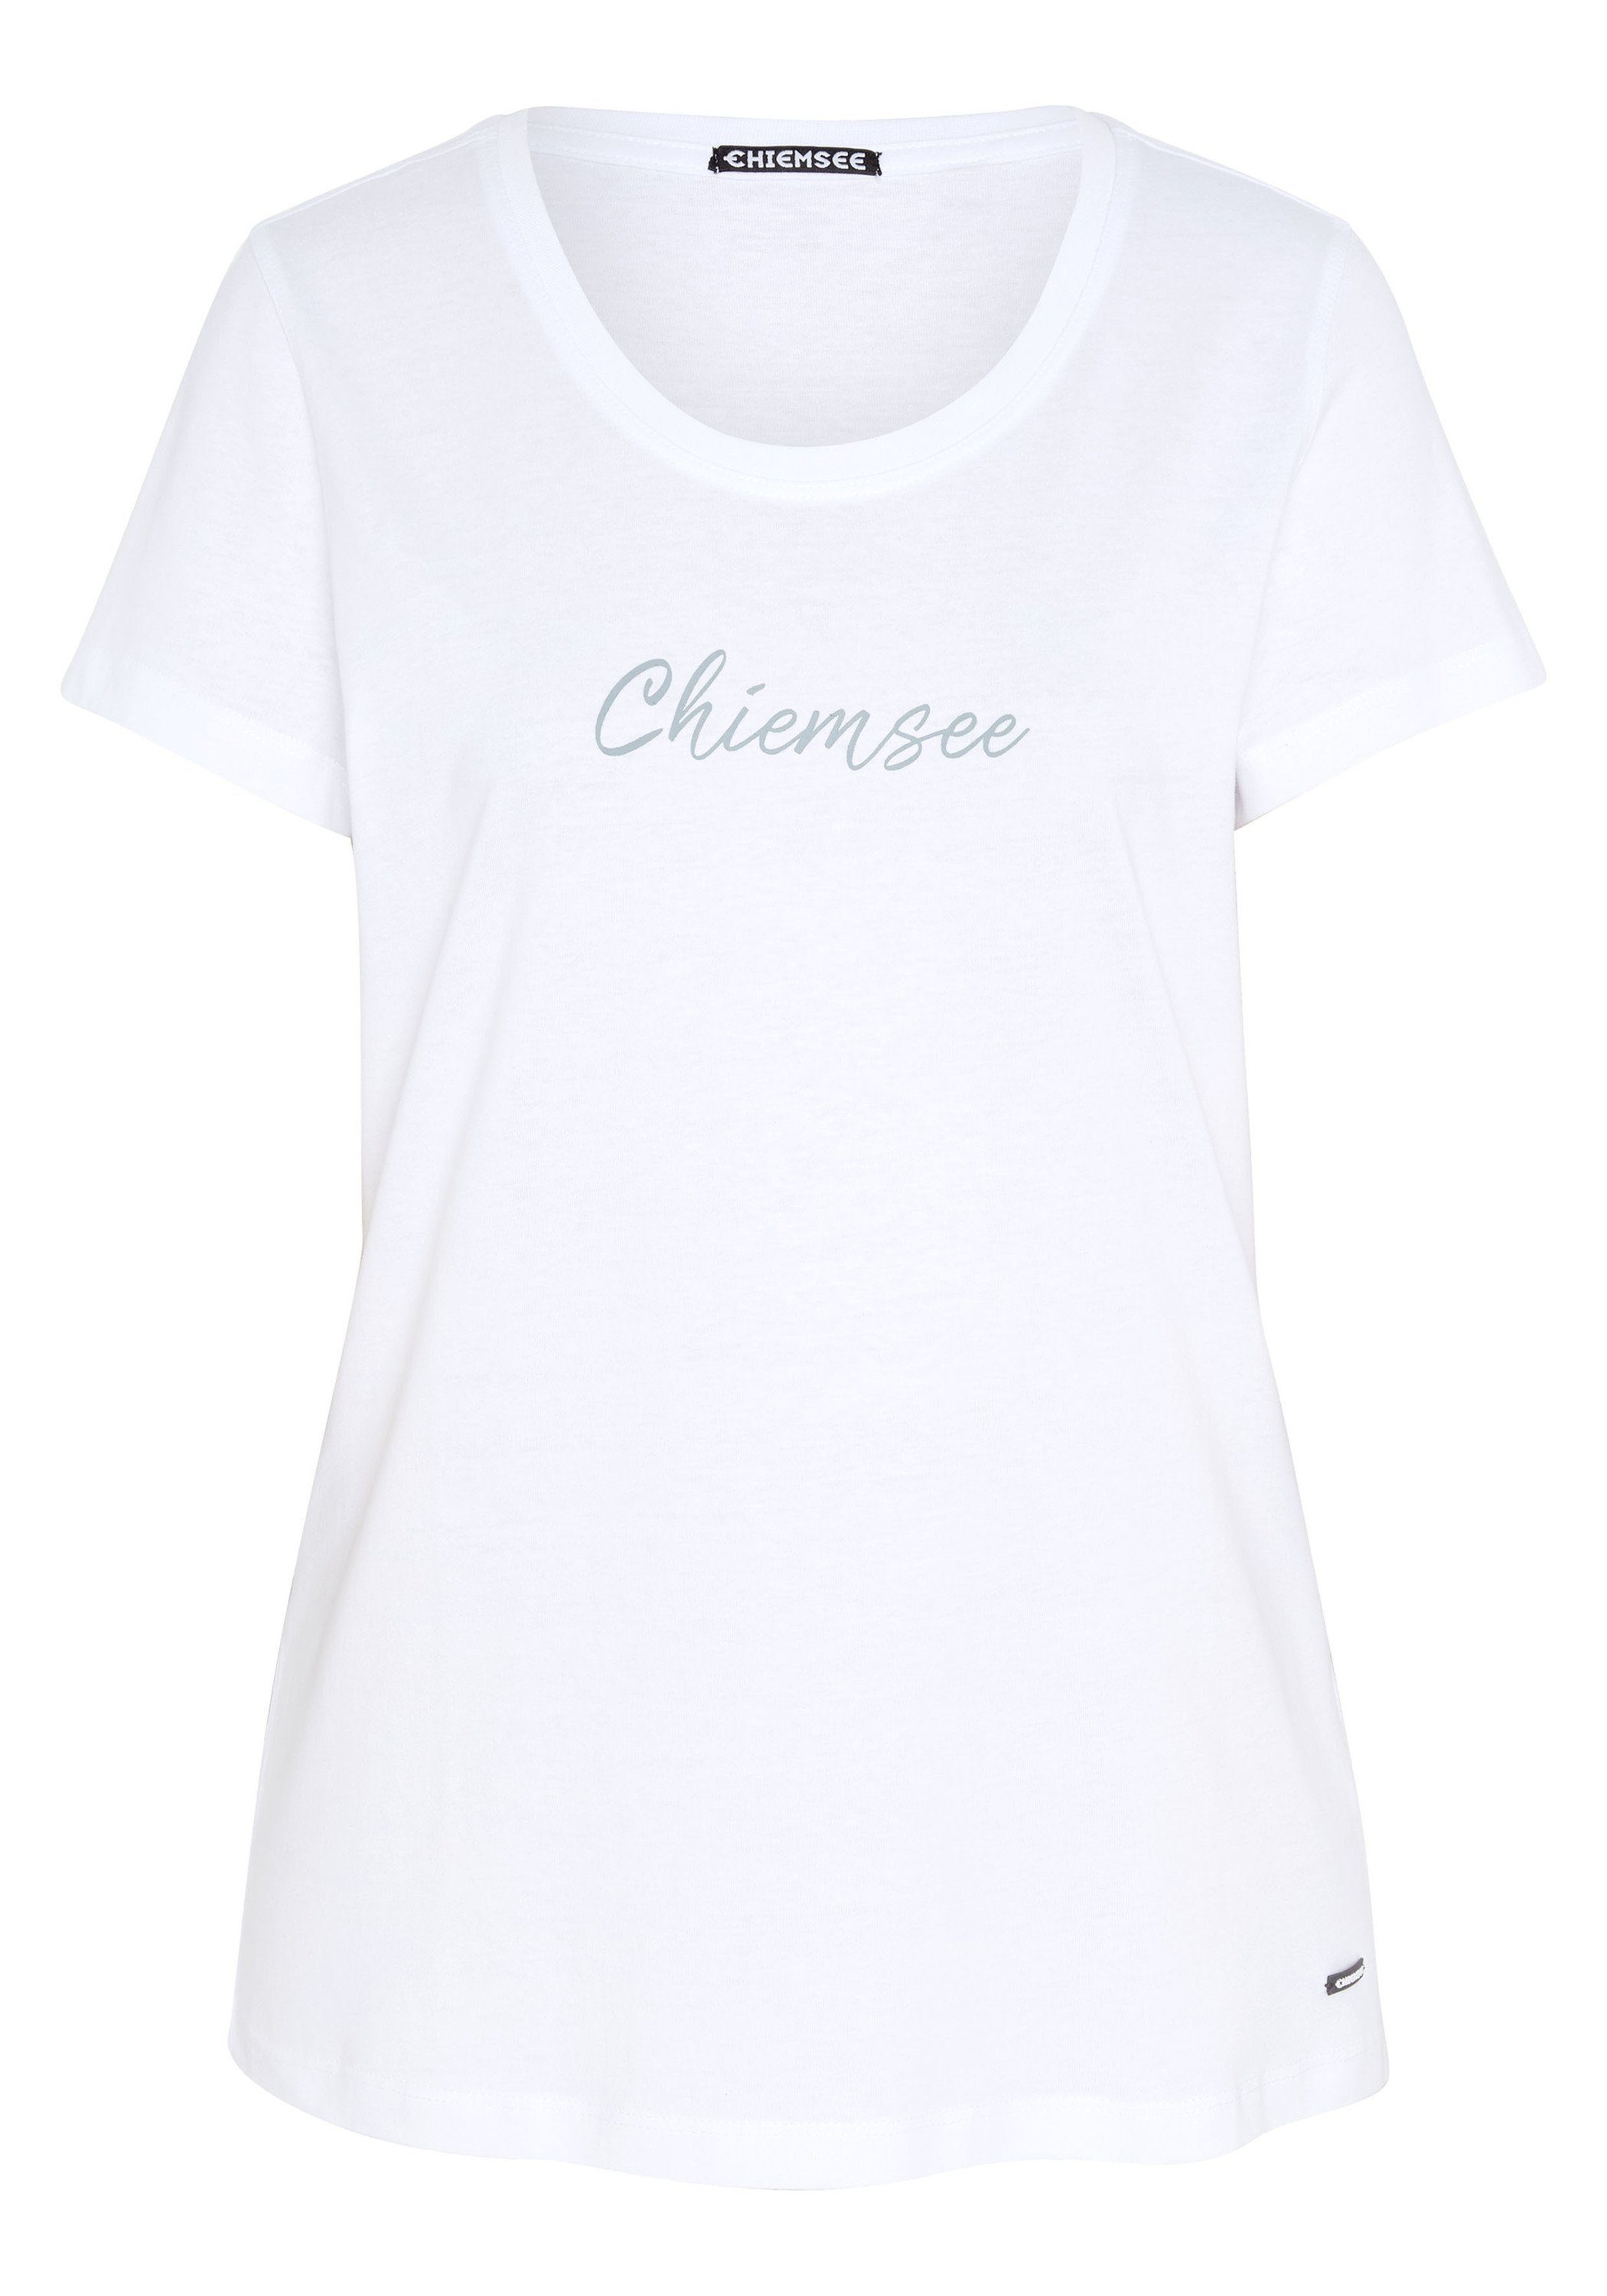 Print-Shirt im 1 Chiemsee Label-Look T-Shirt Bright White 11-0601